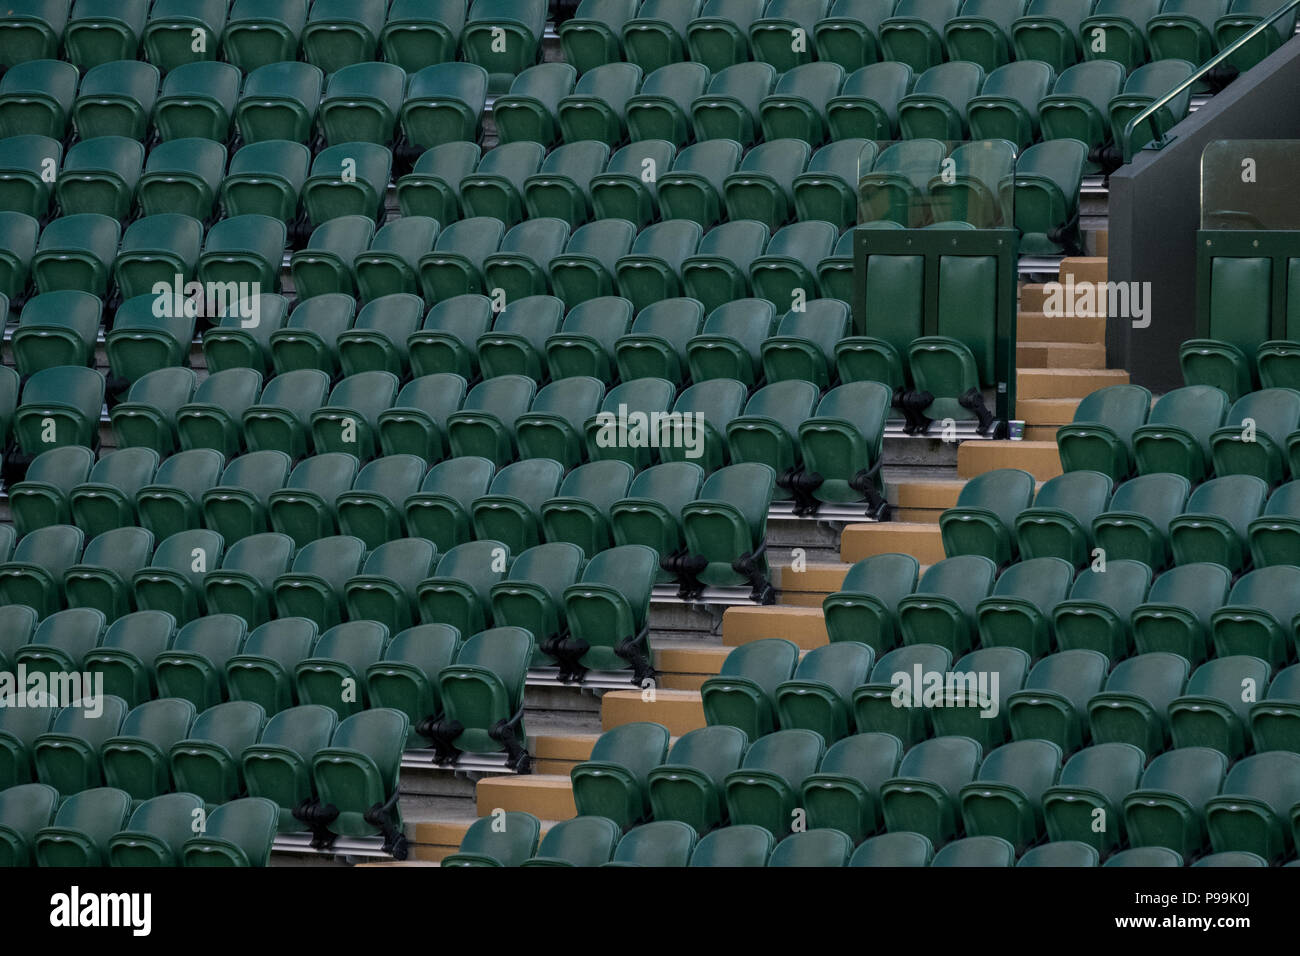 Wimbledon London, July 2018. Rows of empty green spectators' seats at Wimbledon All England Lawn Tennis Club. Stock Photo